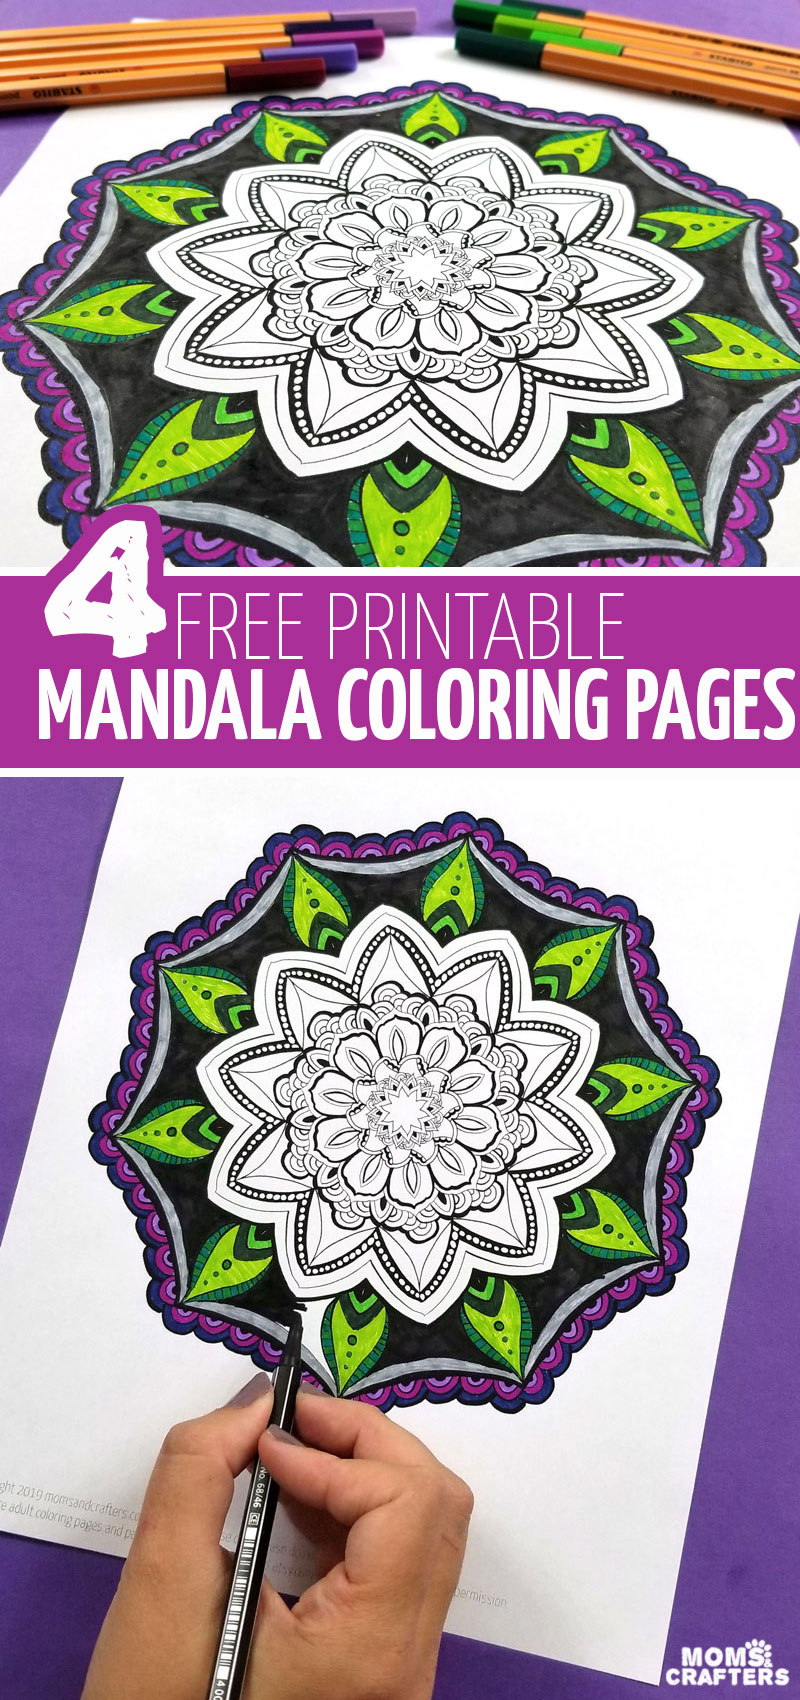 Mandala-de-descarga-em-pdf-2 - Mandalas - Coloring Pages for Adults